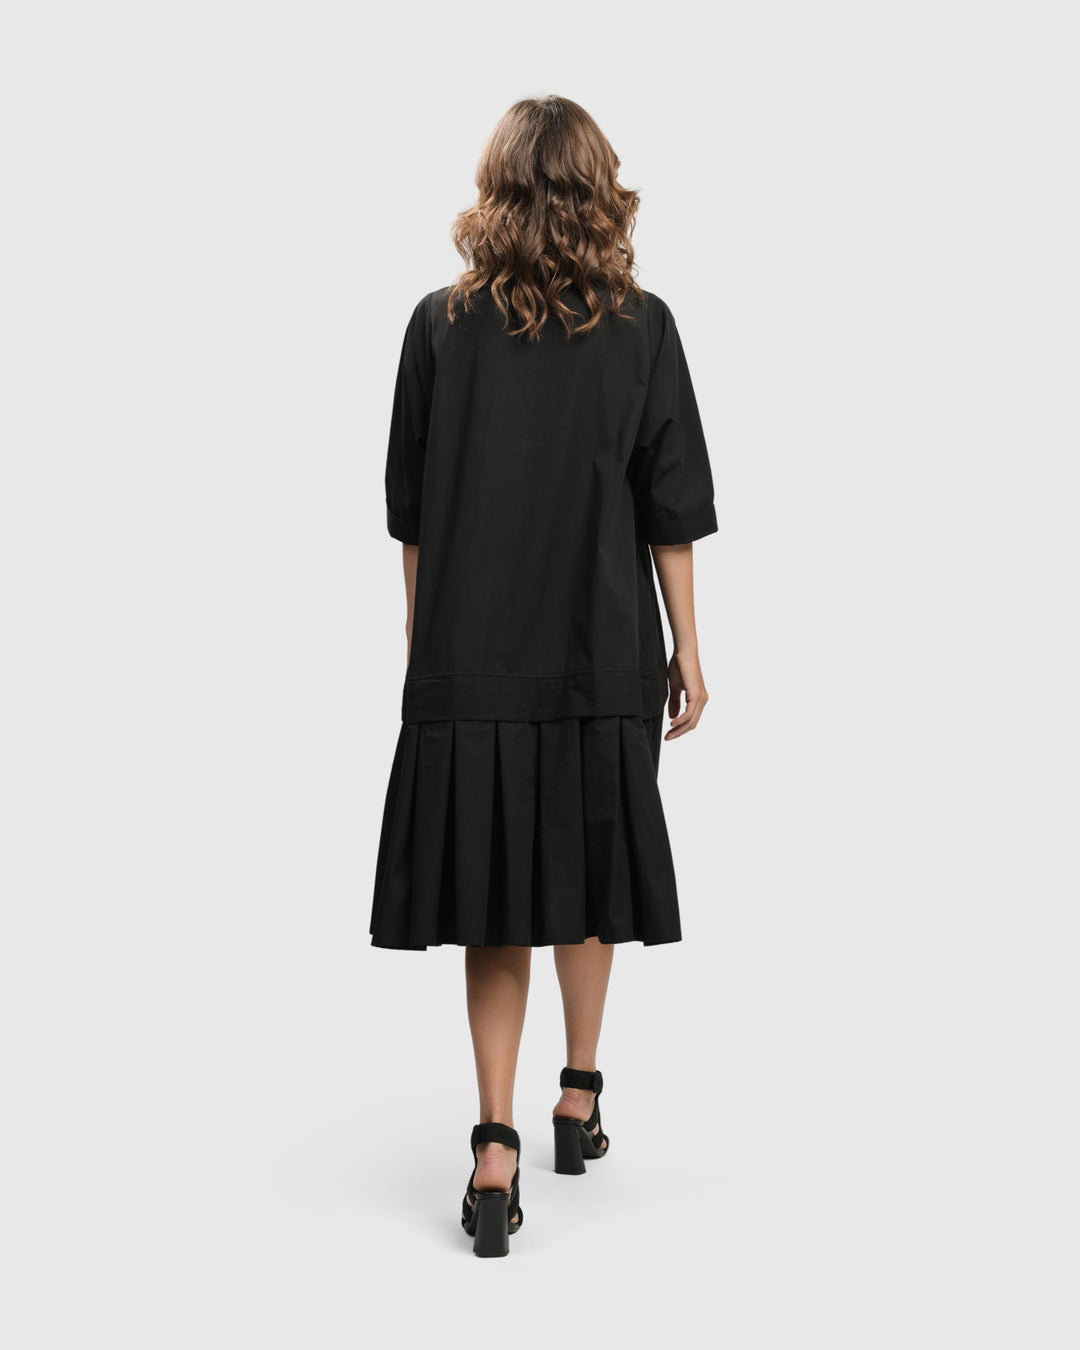 Urban Astor Shirt Dress, Black